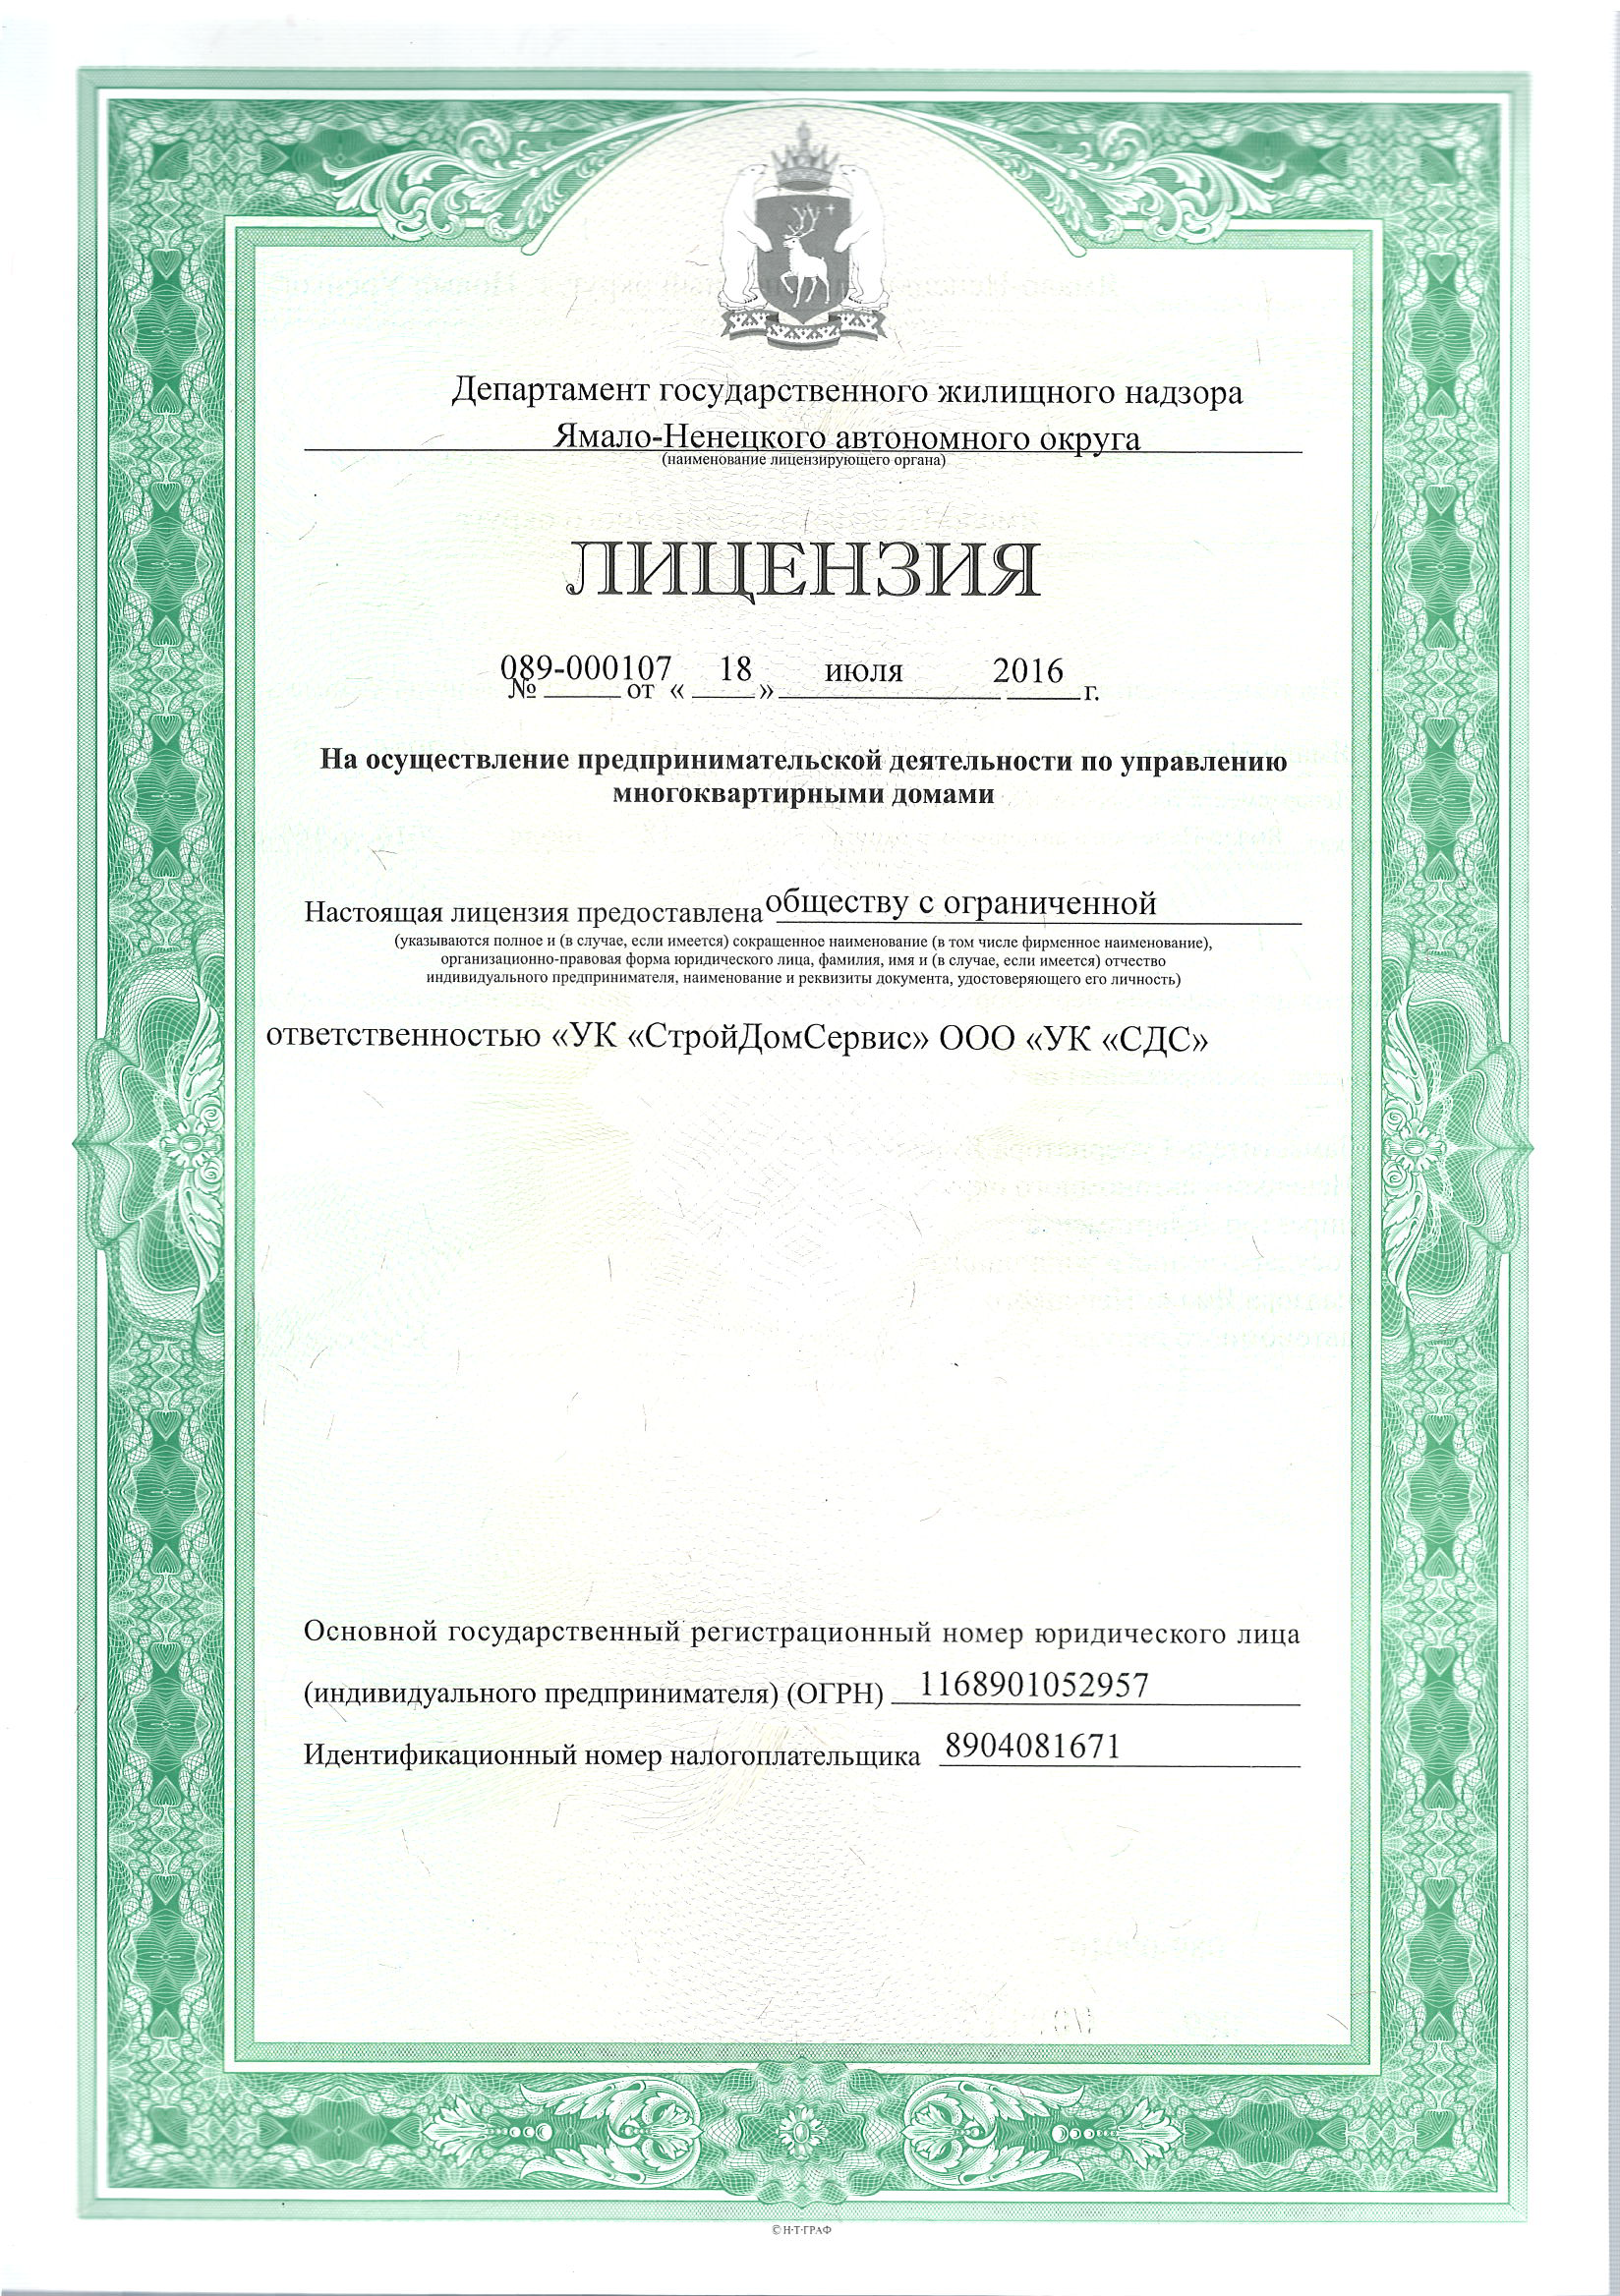 Лицензия на управление МКД №089-000107 от 18.07.2016